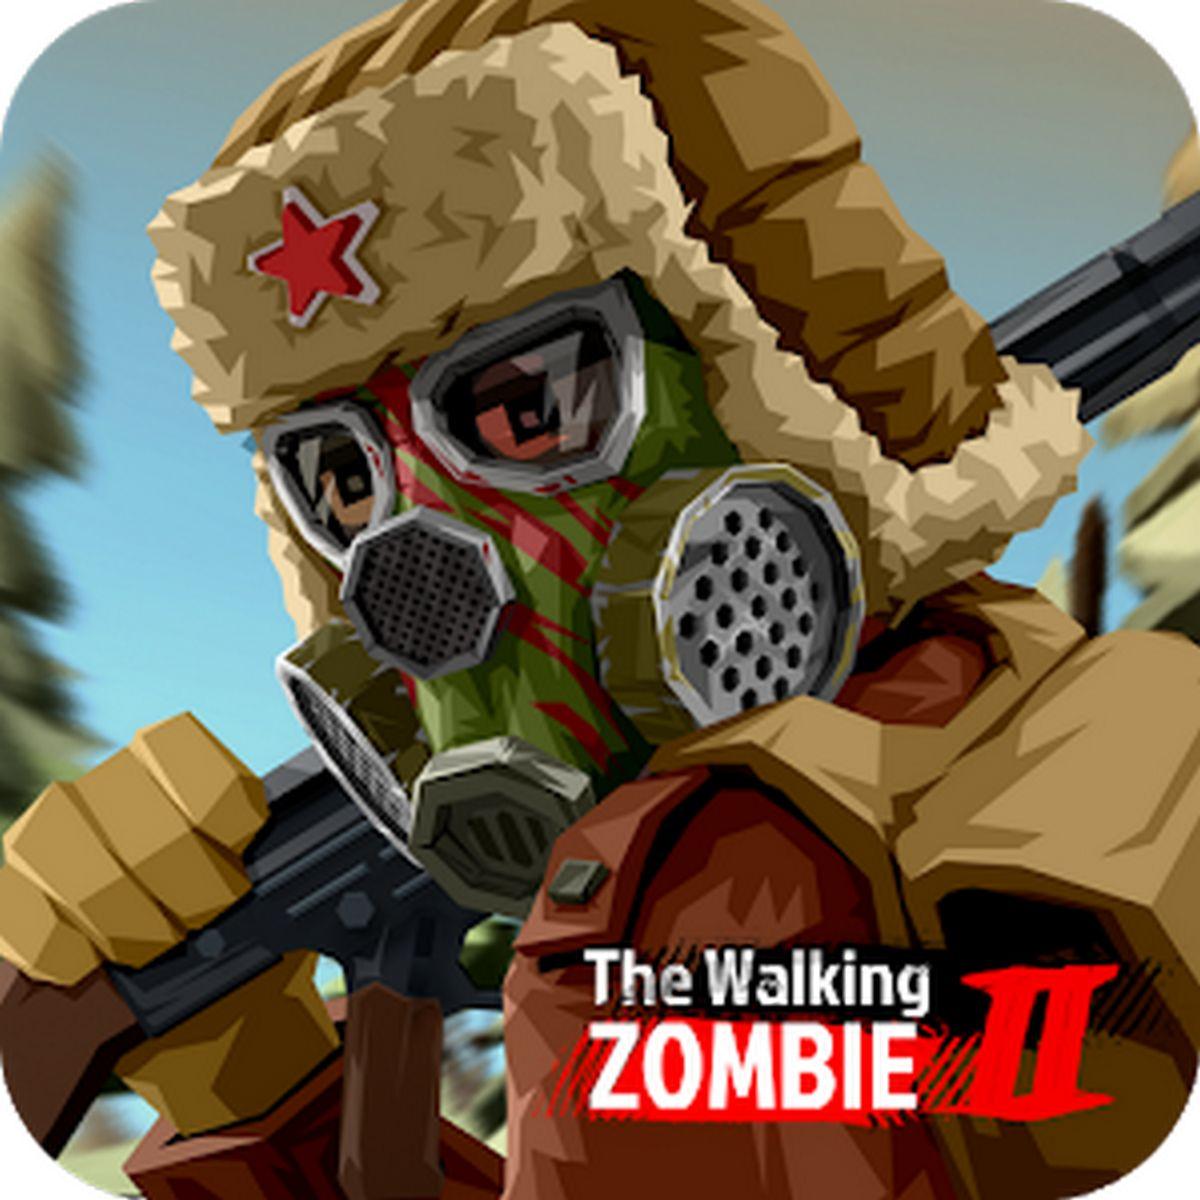 The Walking Zombie 2: Zombie shooter APK MOD v3.5.3 (Compras gratis)